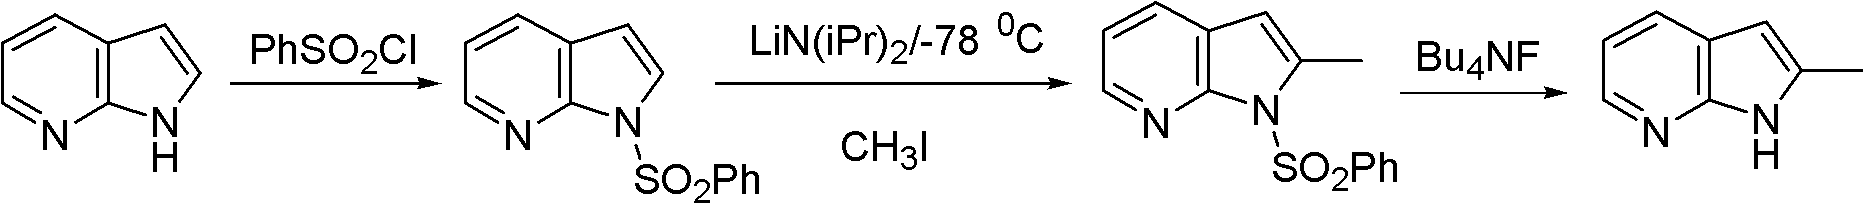 Preparation method of 2-methyl-7-azaindole